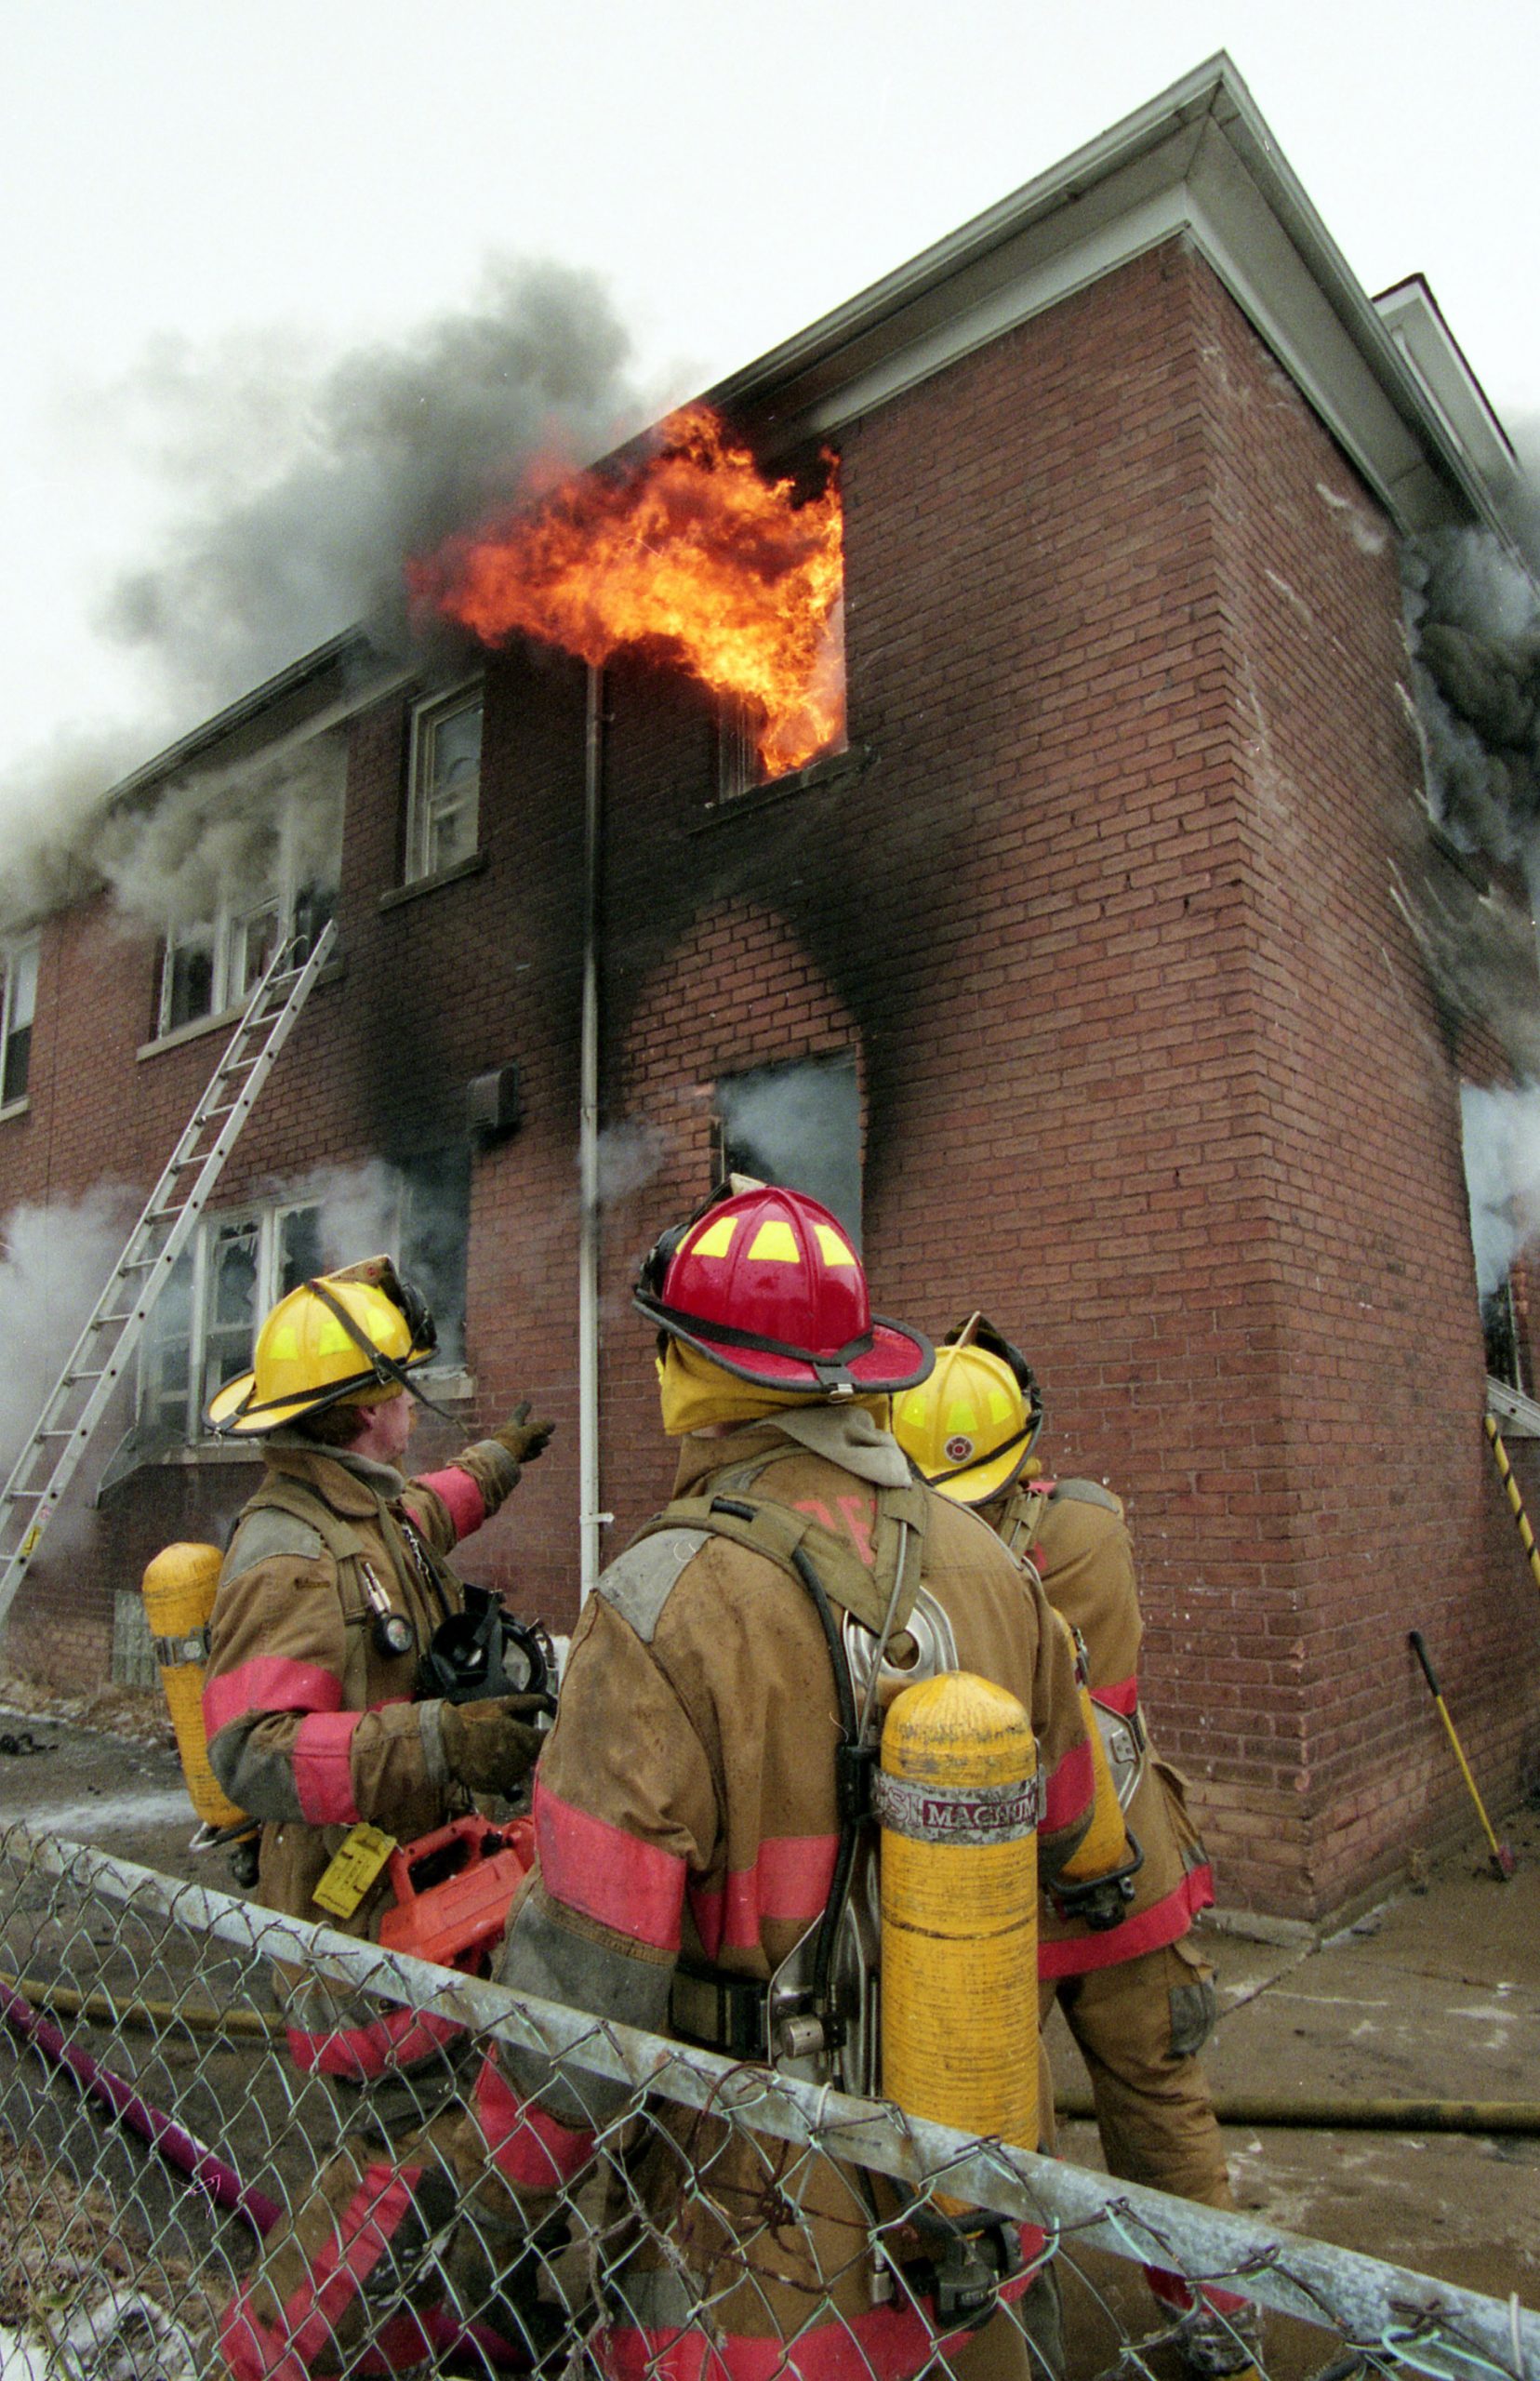 Neighbors evacuate as a multiple unit burns; 2000.